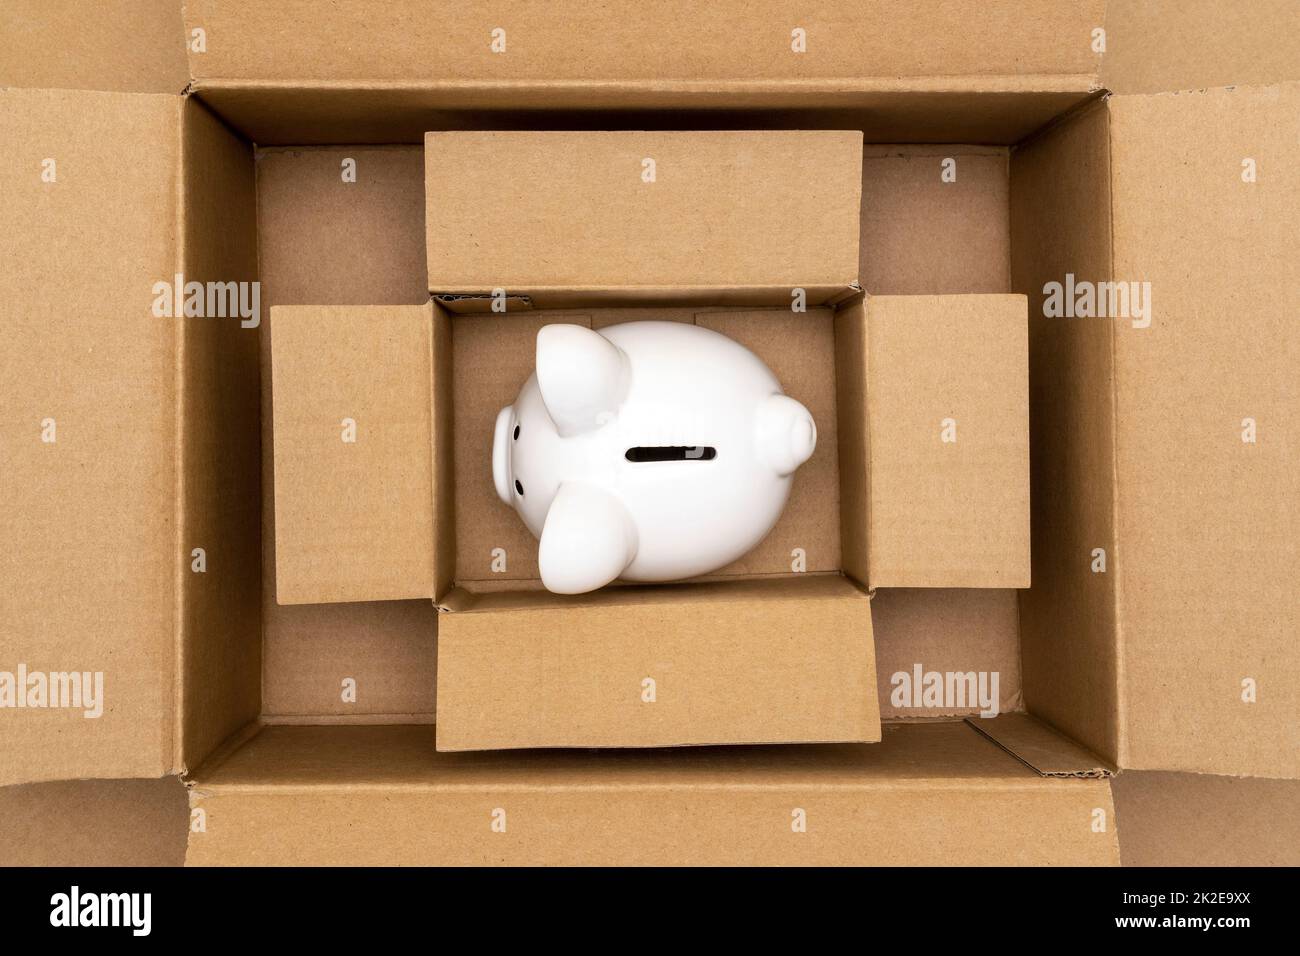 Ceramic piggy bank in open cardboard boxes Stock Photo